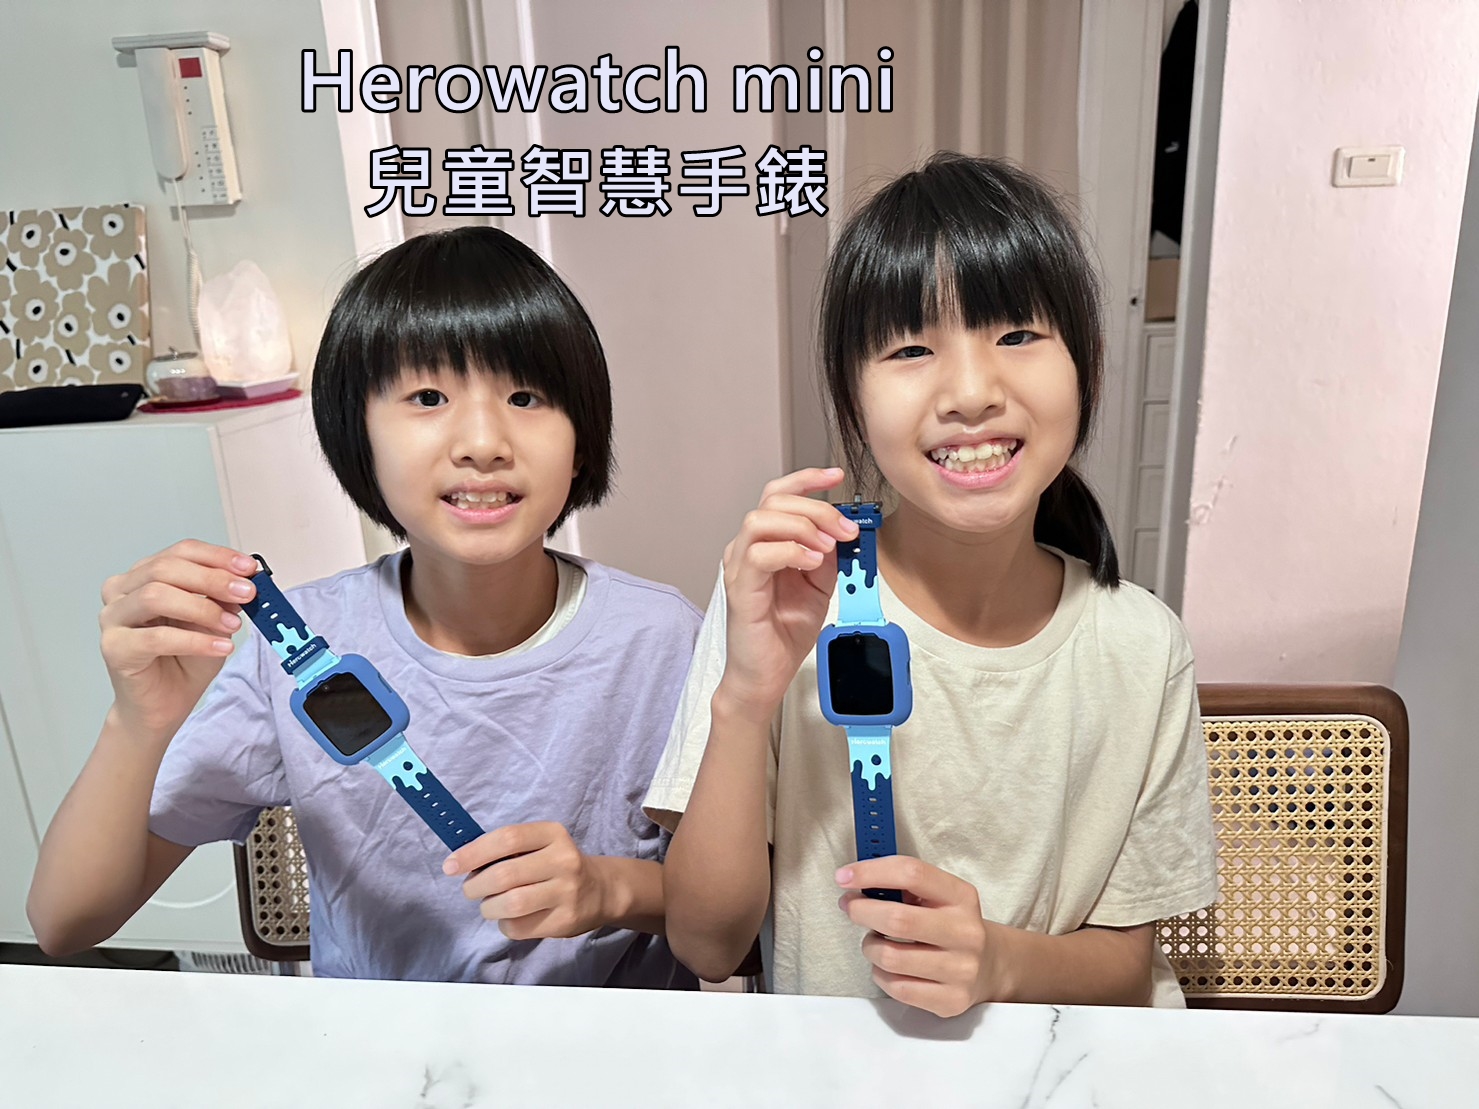 Herowatch mini 兒童智慧手錶 小一新生、兒童安全必備!精準定位、生活防水、視訊電話、SOS求救、遠程監聽、上課禁用